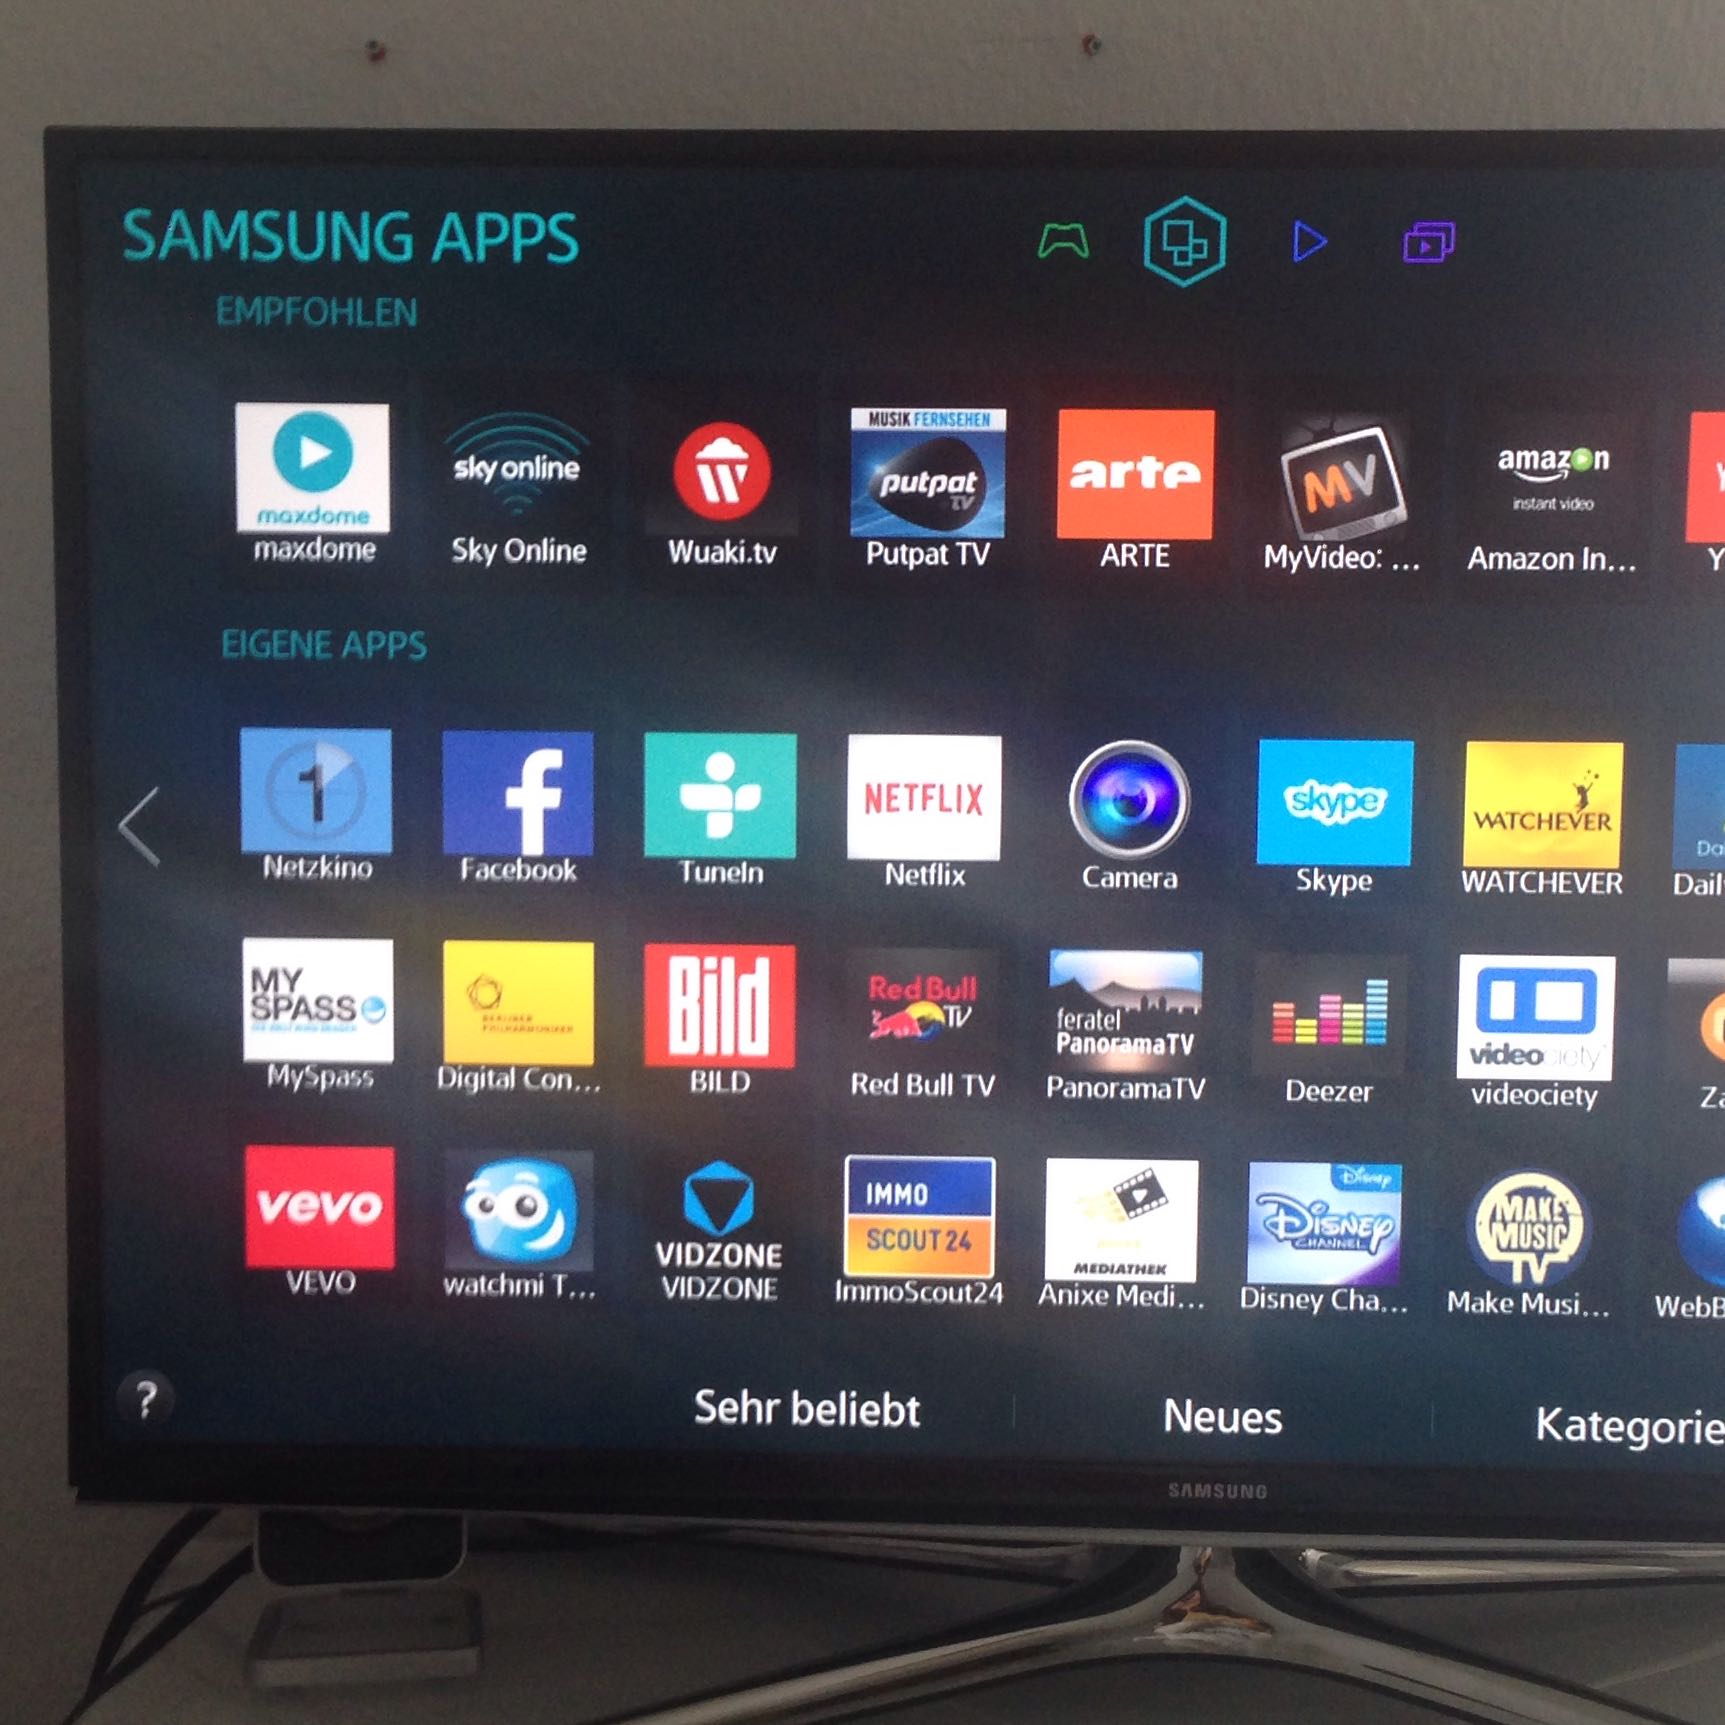 Тв приложение для телевизора самсунг. Samsung Smart TV приложения. Samsung Smart TV Store. Samsung apps для телевизора Smart TV. Samsung TV 2014.